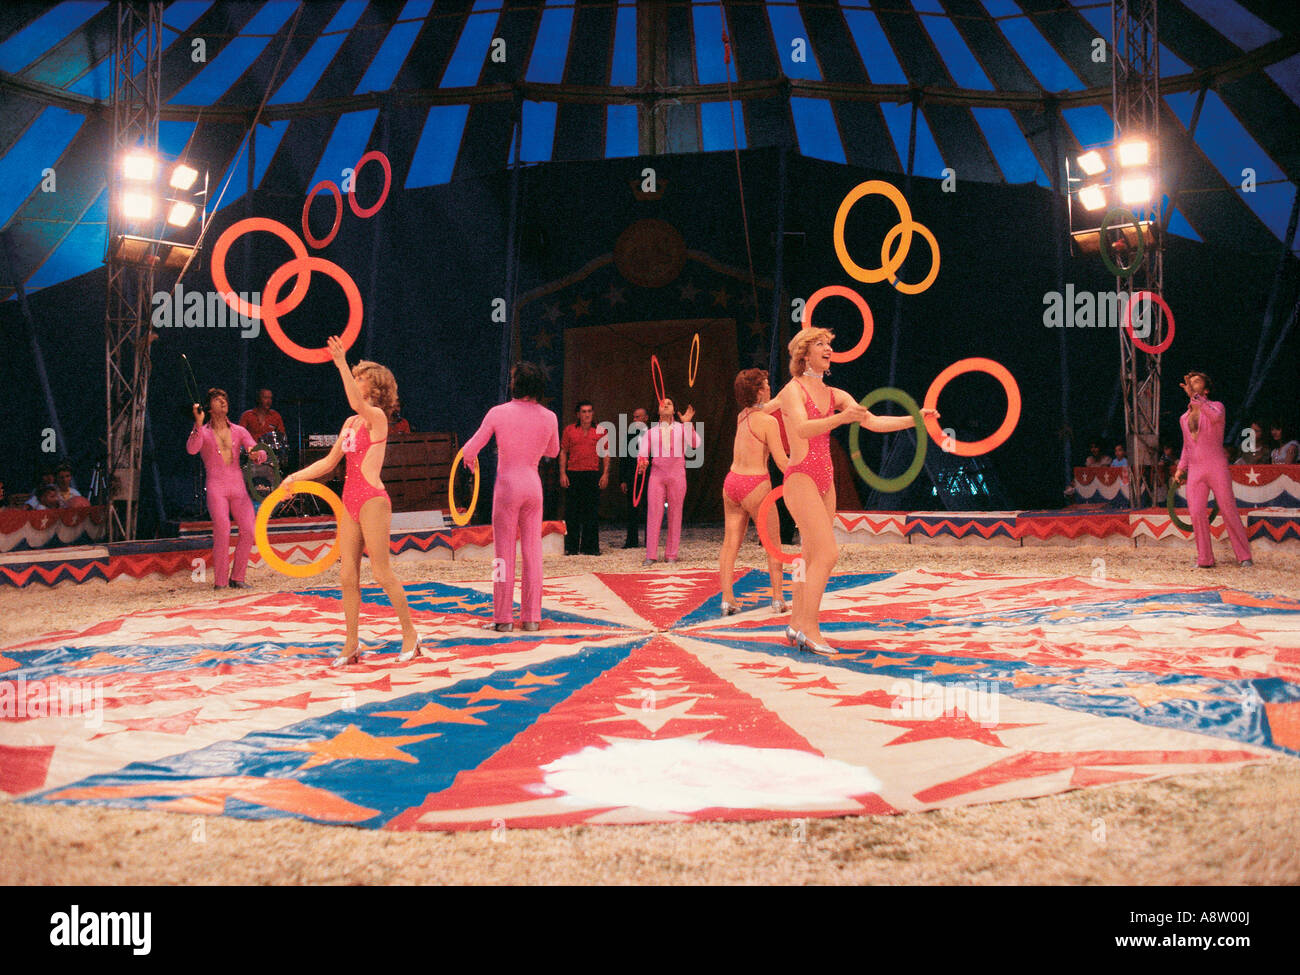 Inside big top tent Circus performers juggling act. Stock Photo